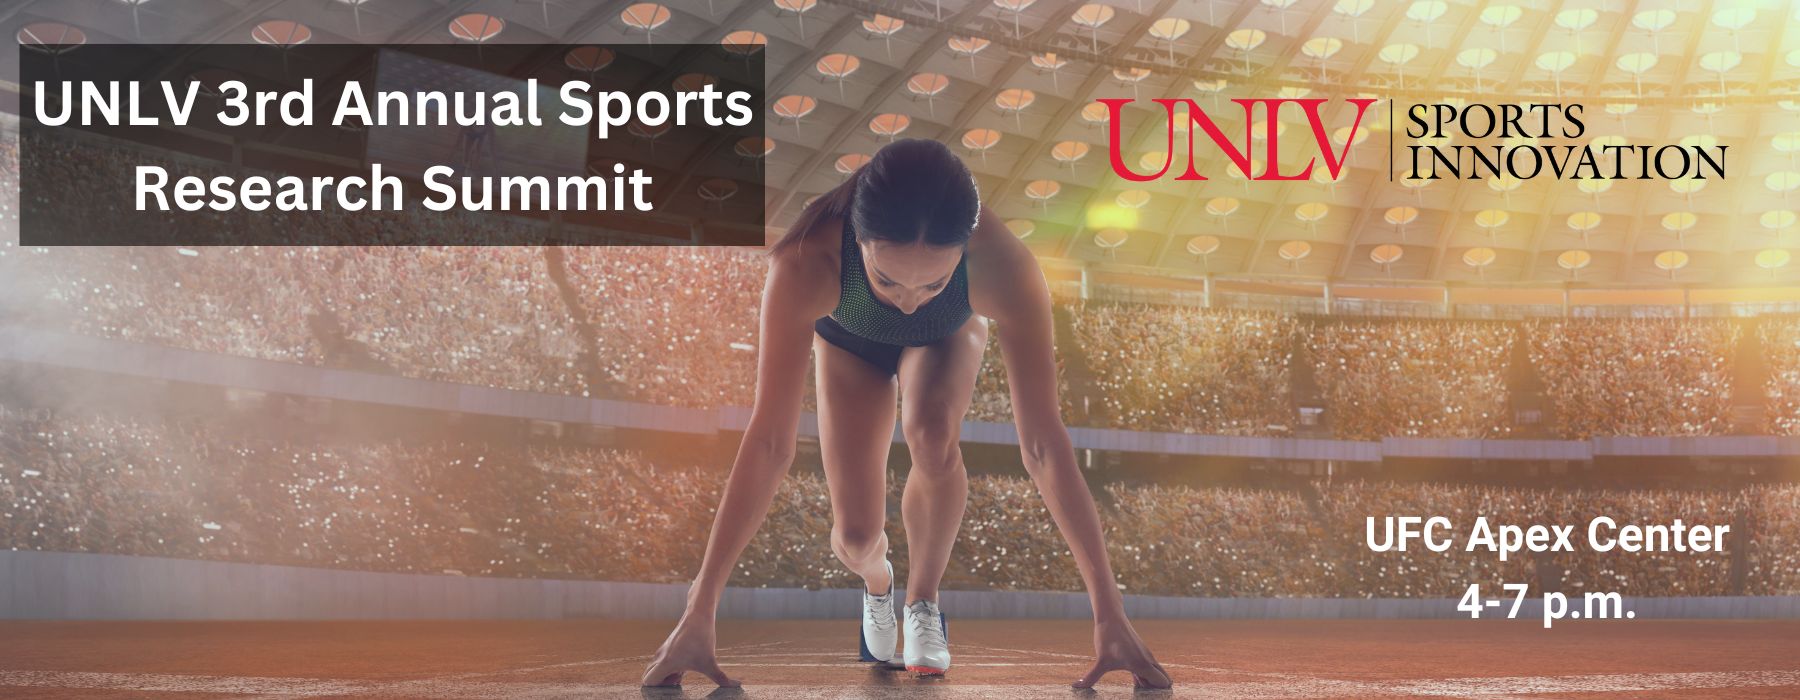 UNLV 3rd Annual Sports Research Summit Image pfbdnI.tmp